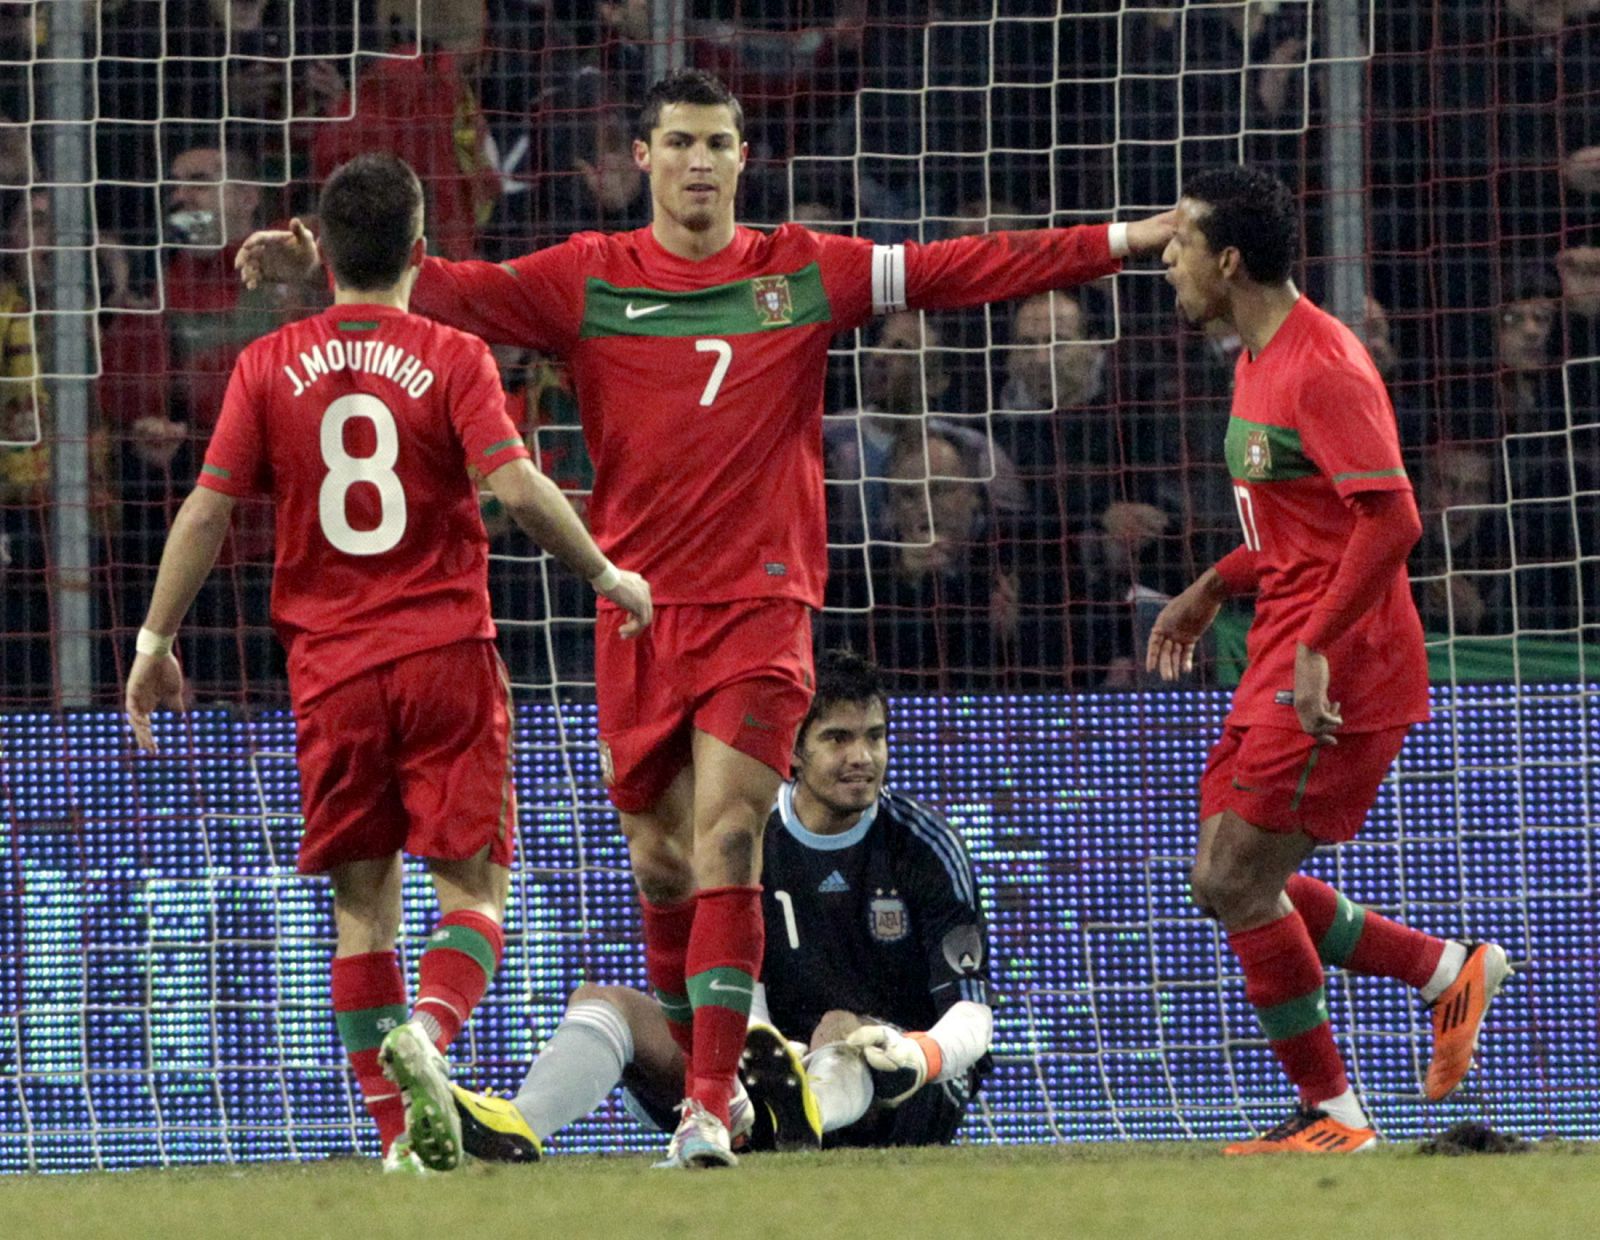 Portugal's Ronaldo scores a goal against Argentina's goalkeeper Romero during their international friendly soccer match at the Stade de Geneve in Geneva